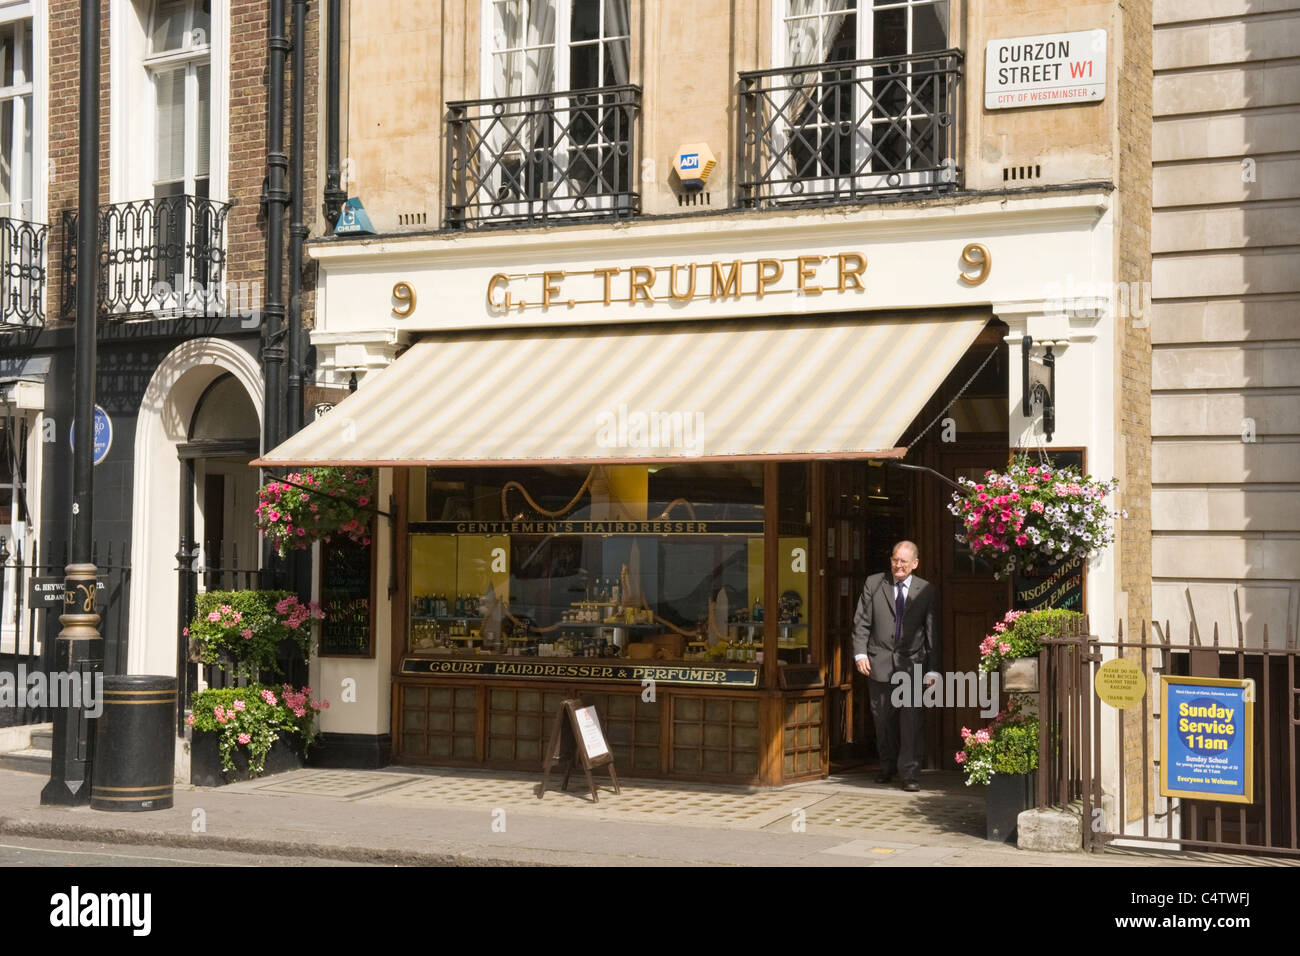 London , Mayfair , G F Trumper Gentlemen 's Court Hairdresser & Perfumer , toilet requisites & grooming products since 1875 Stock Photo